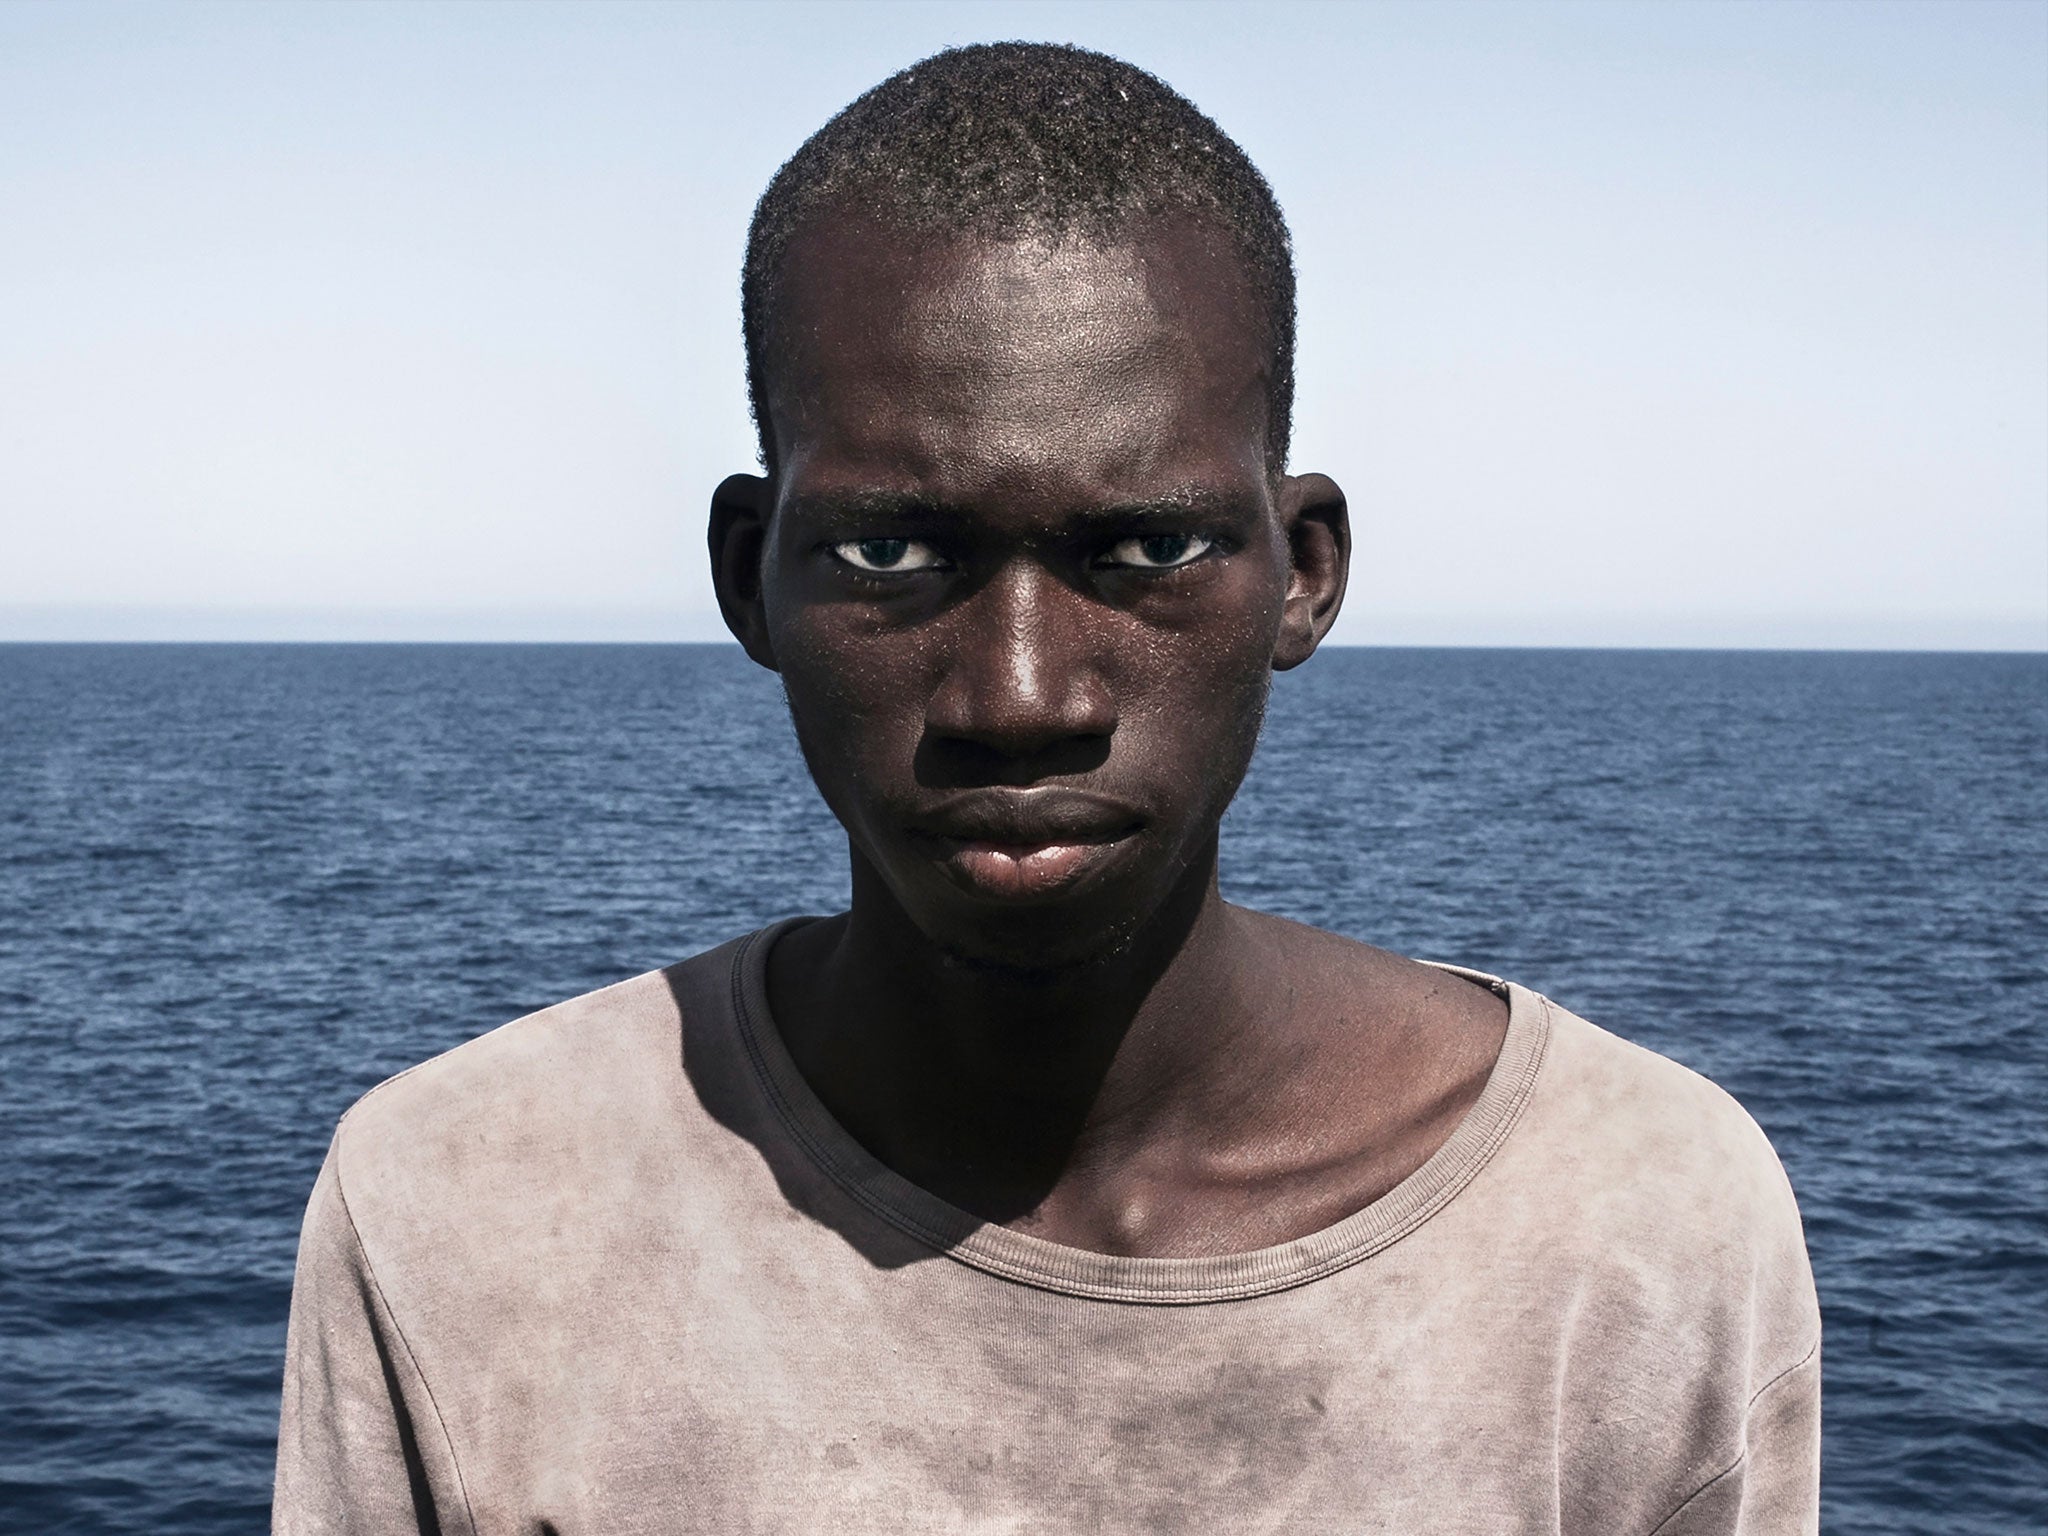 Spanish freelance photographer and journalist Cesar Dezfuli's photo of migrant Amadou Sumaila